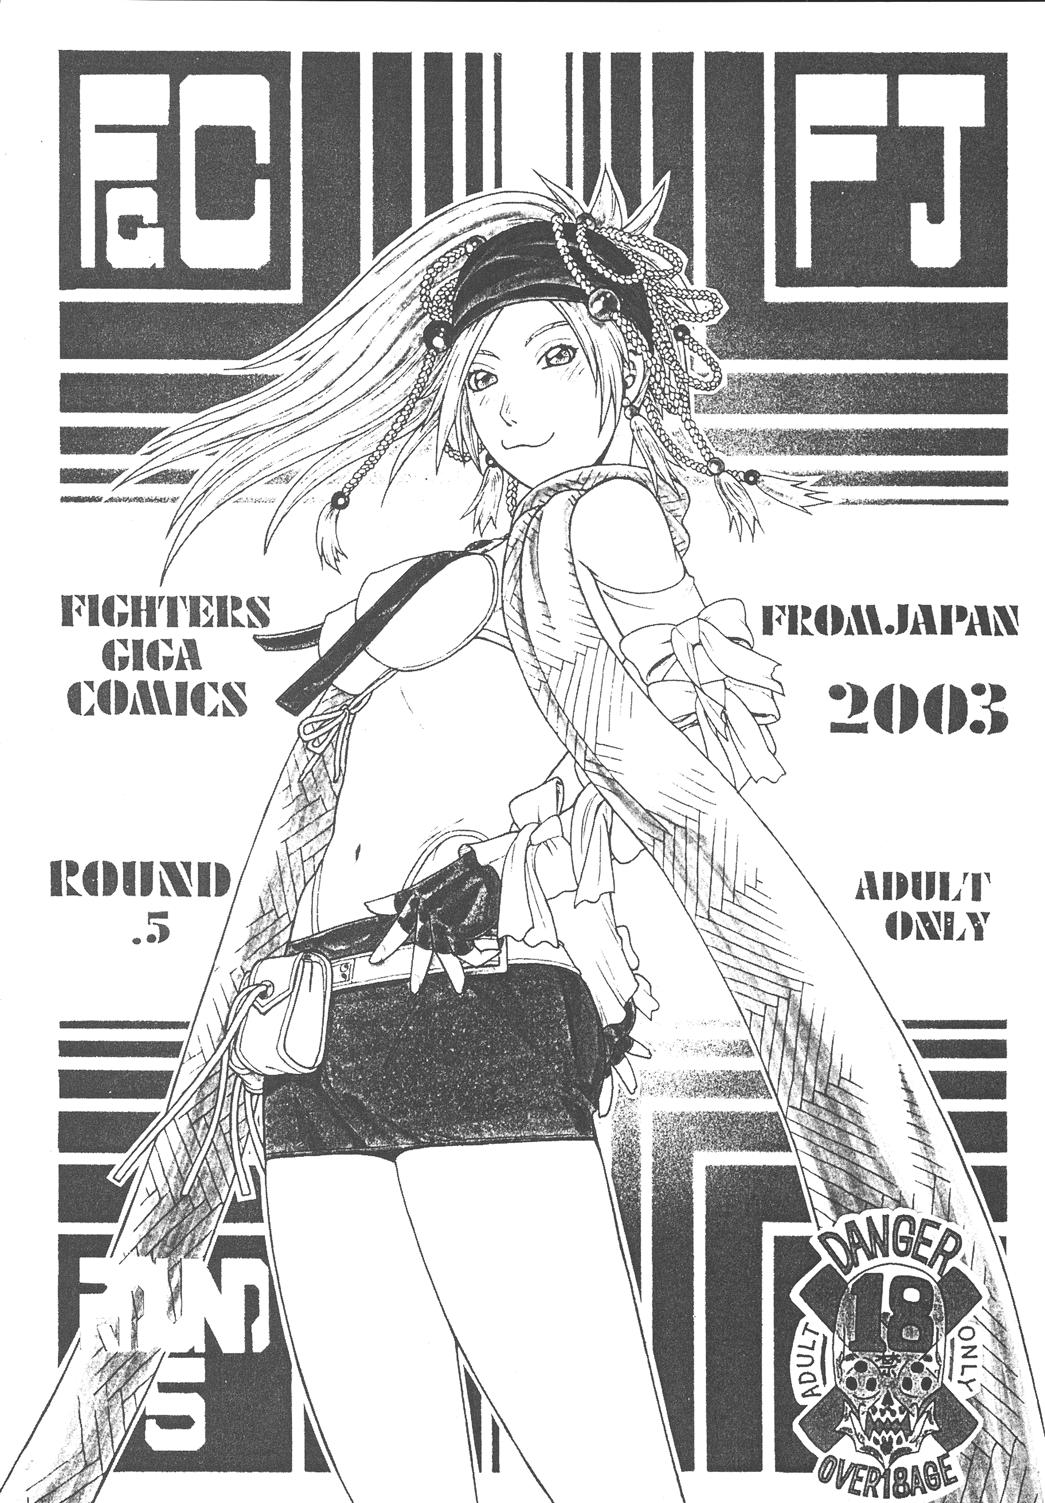 Fighters Giga Comics Round 5 2